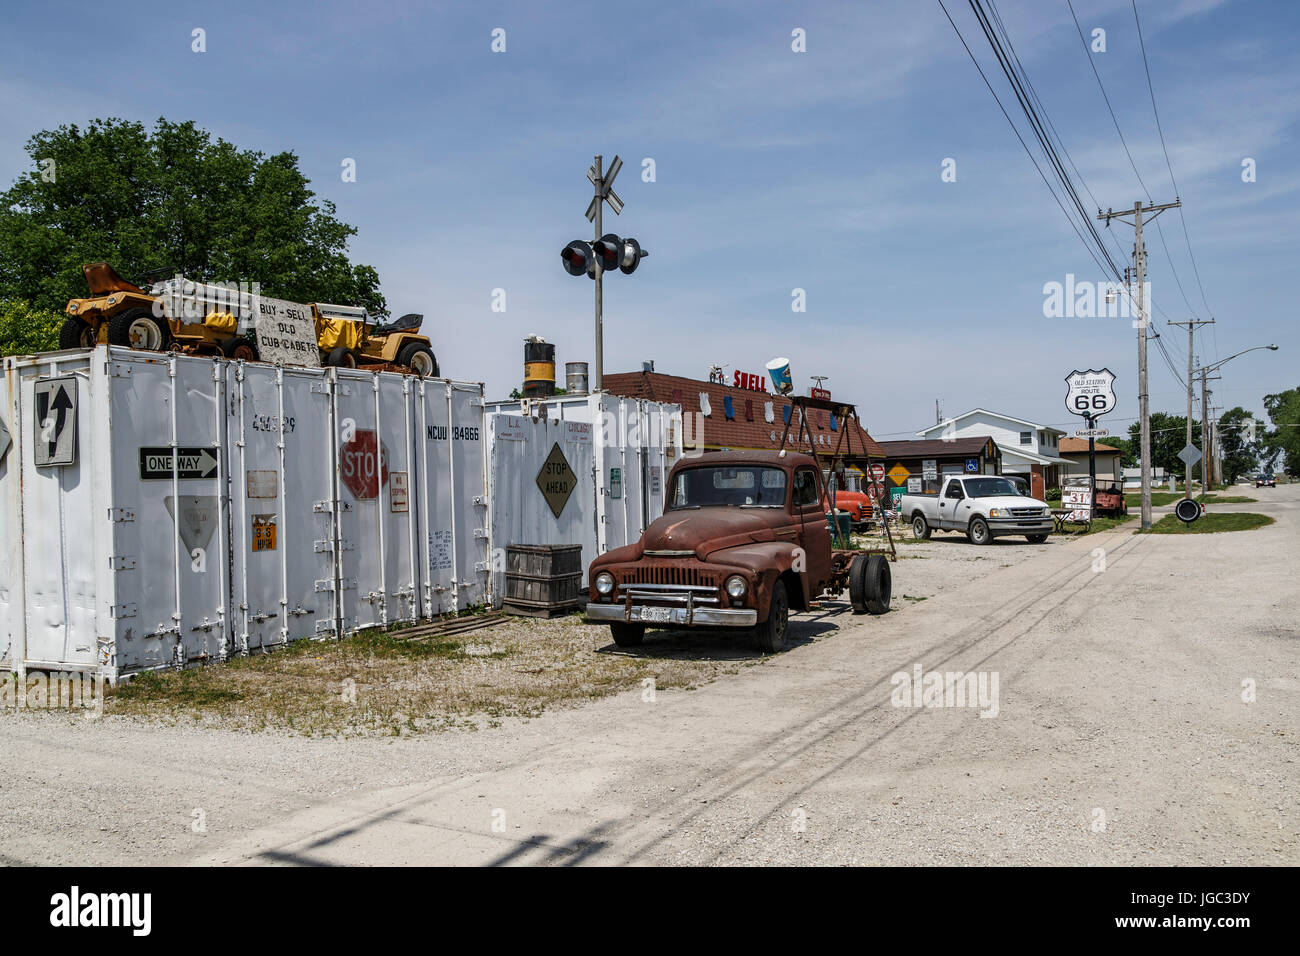 The Old Station, Williamsville, Historic Route 66, Illinois, USA Stock Photo